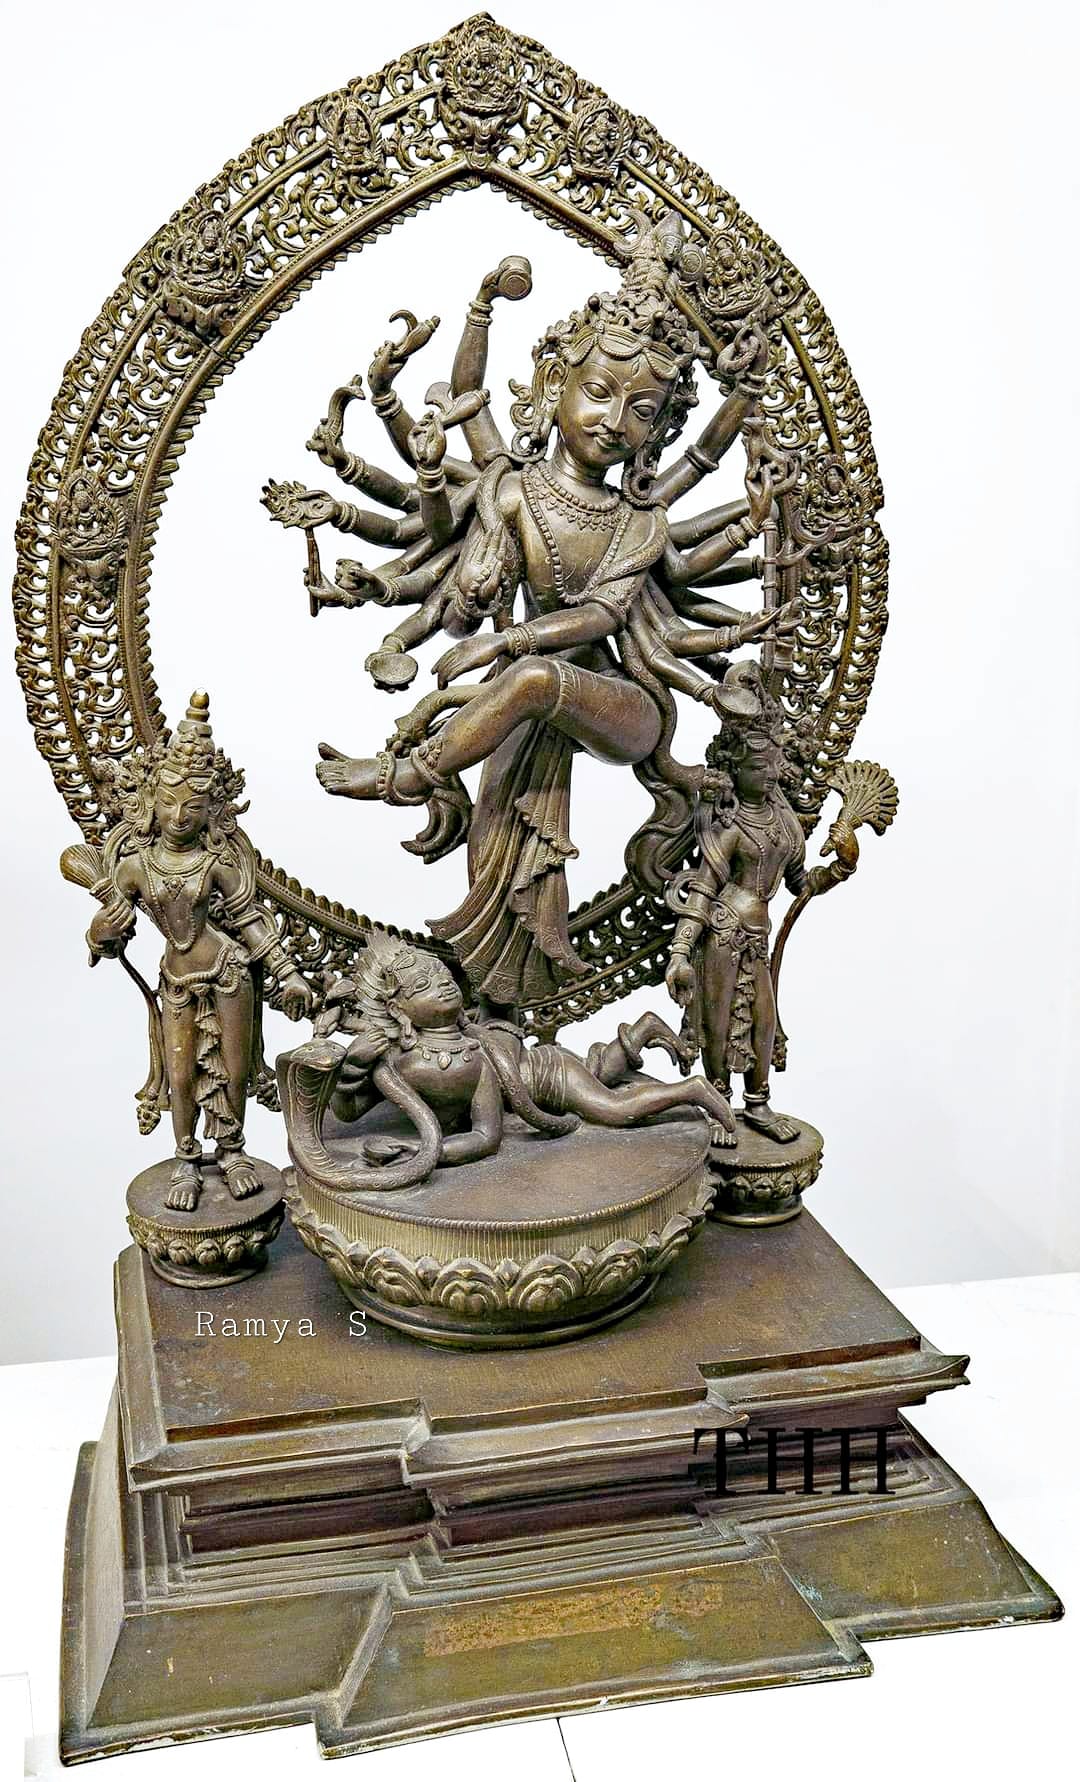 Rare Natarajar Statue with 20 arts at Nepal Museum-Stumbit Lord Shiva